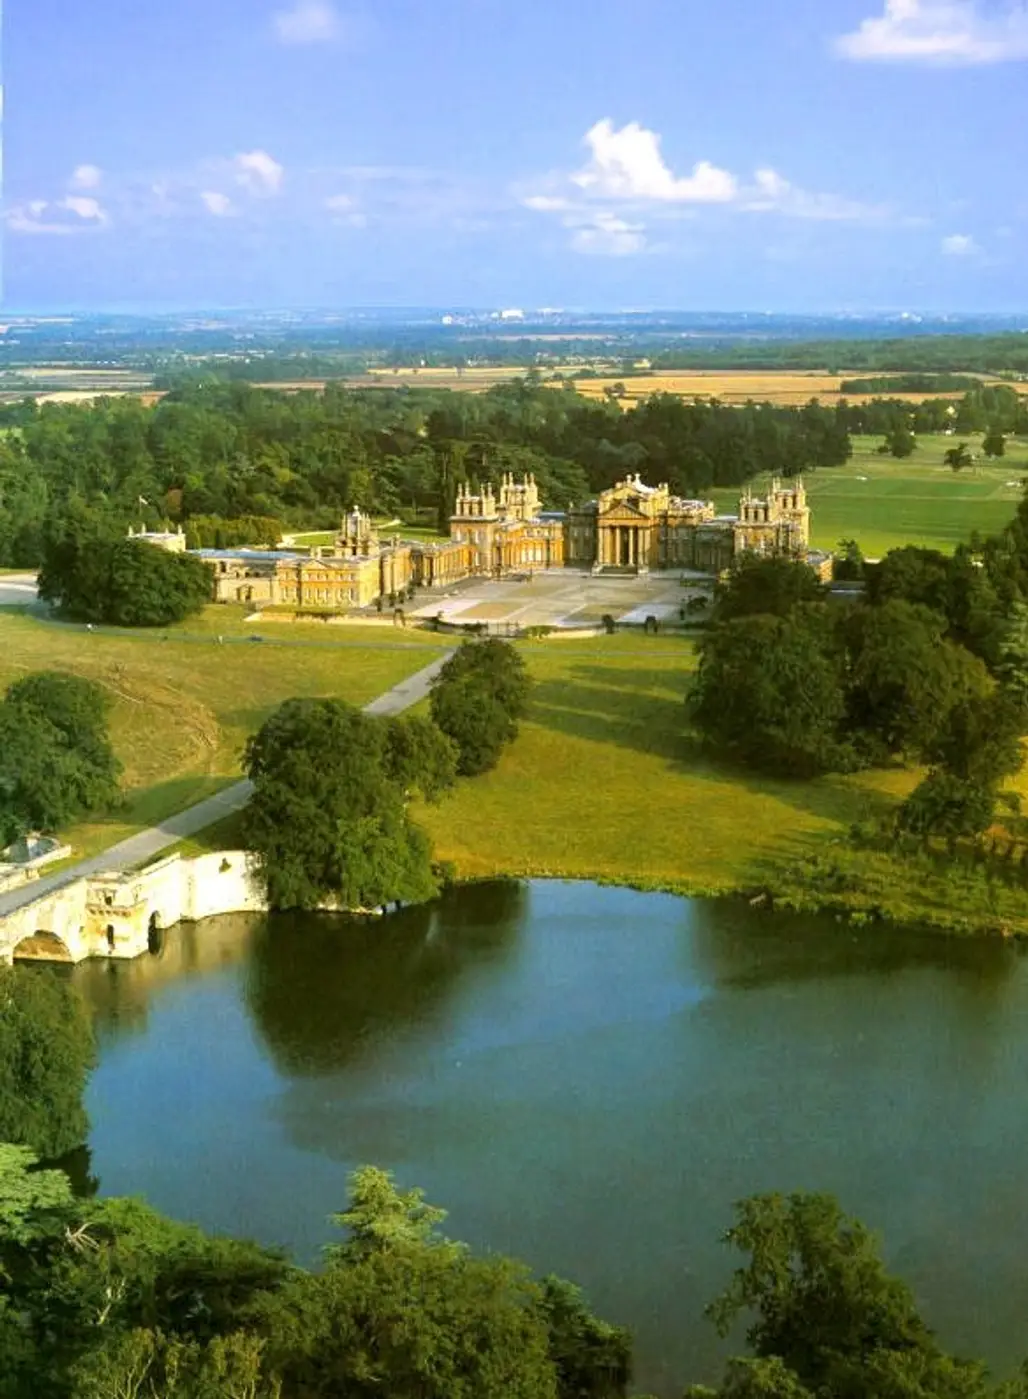 Blenheim Palace, Oxfordshire